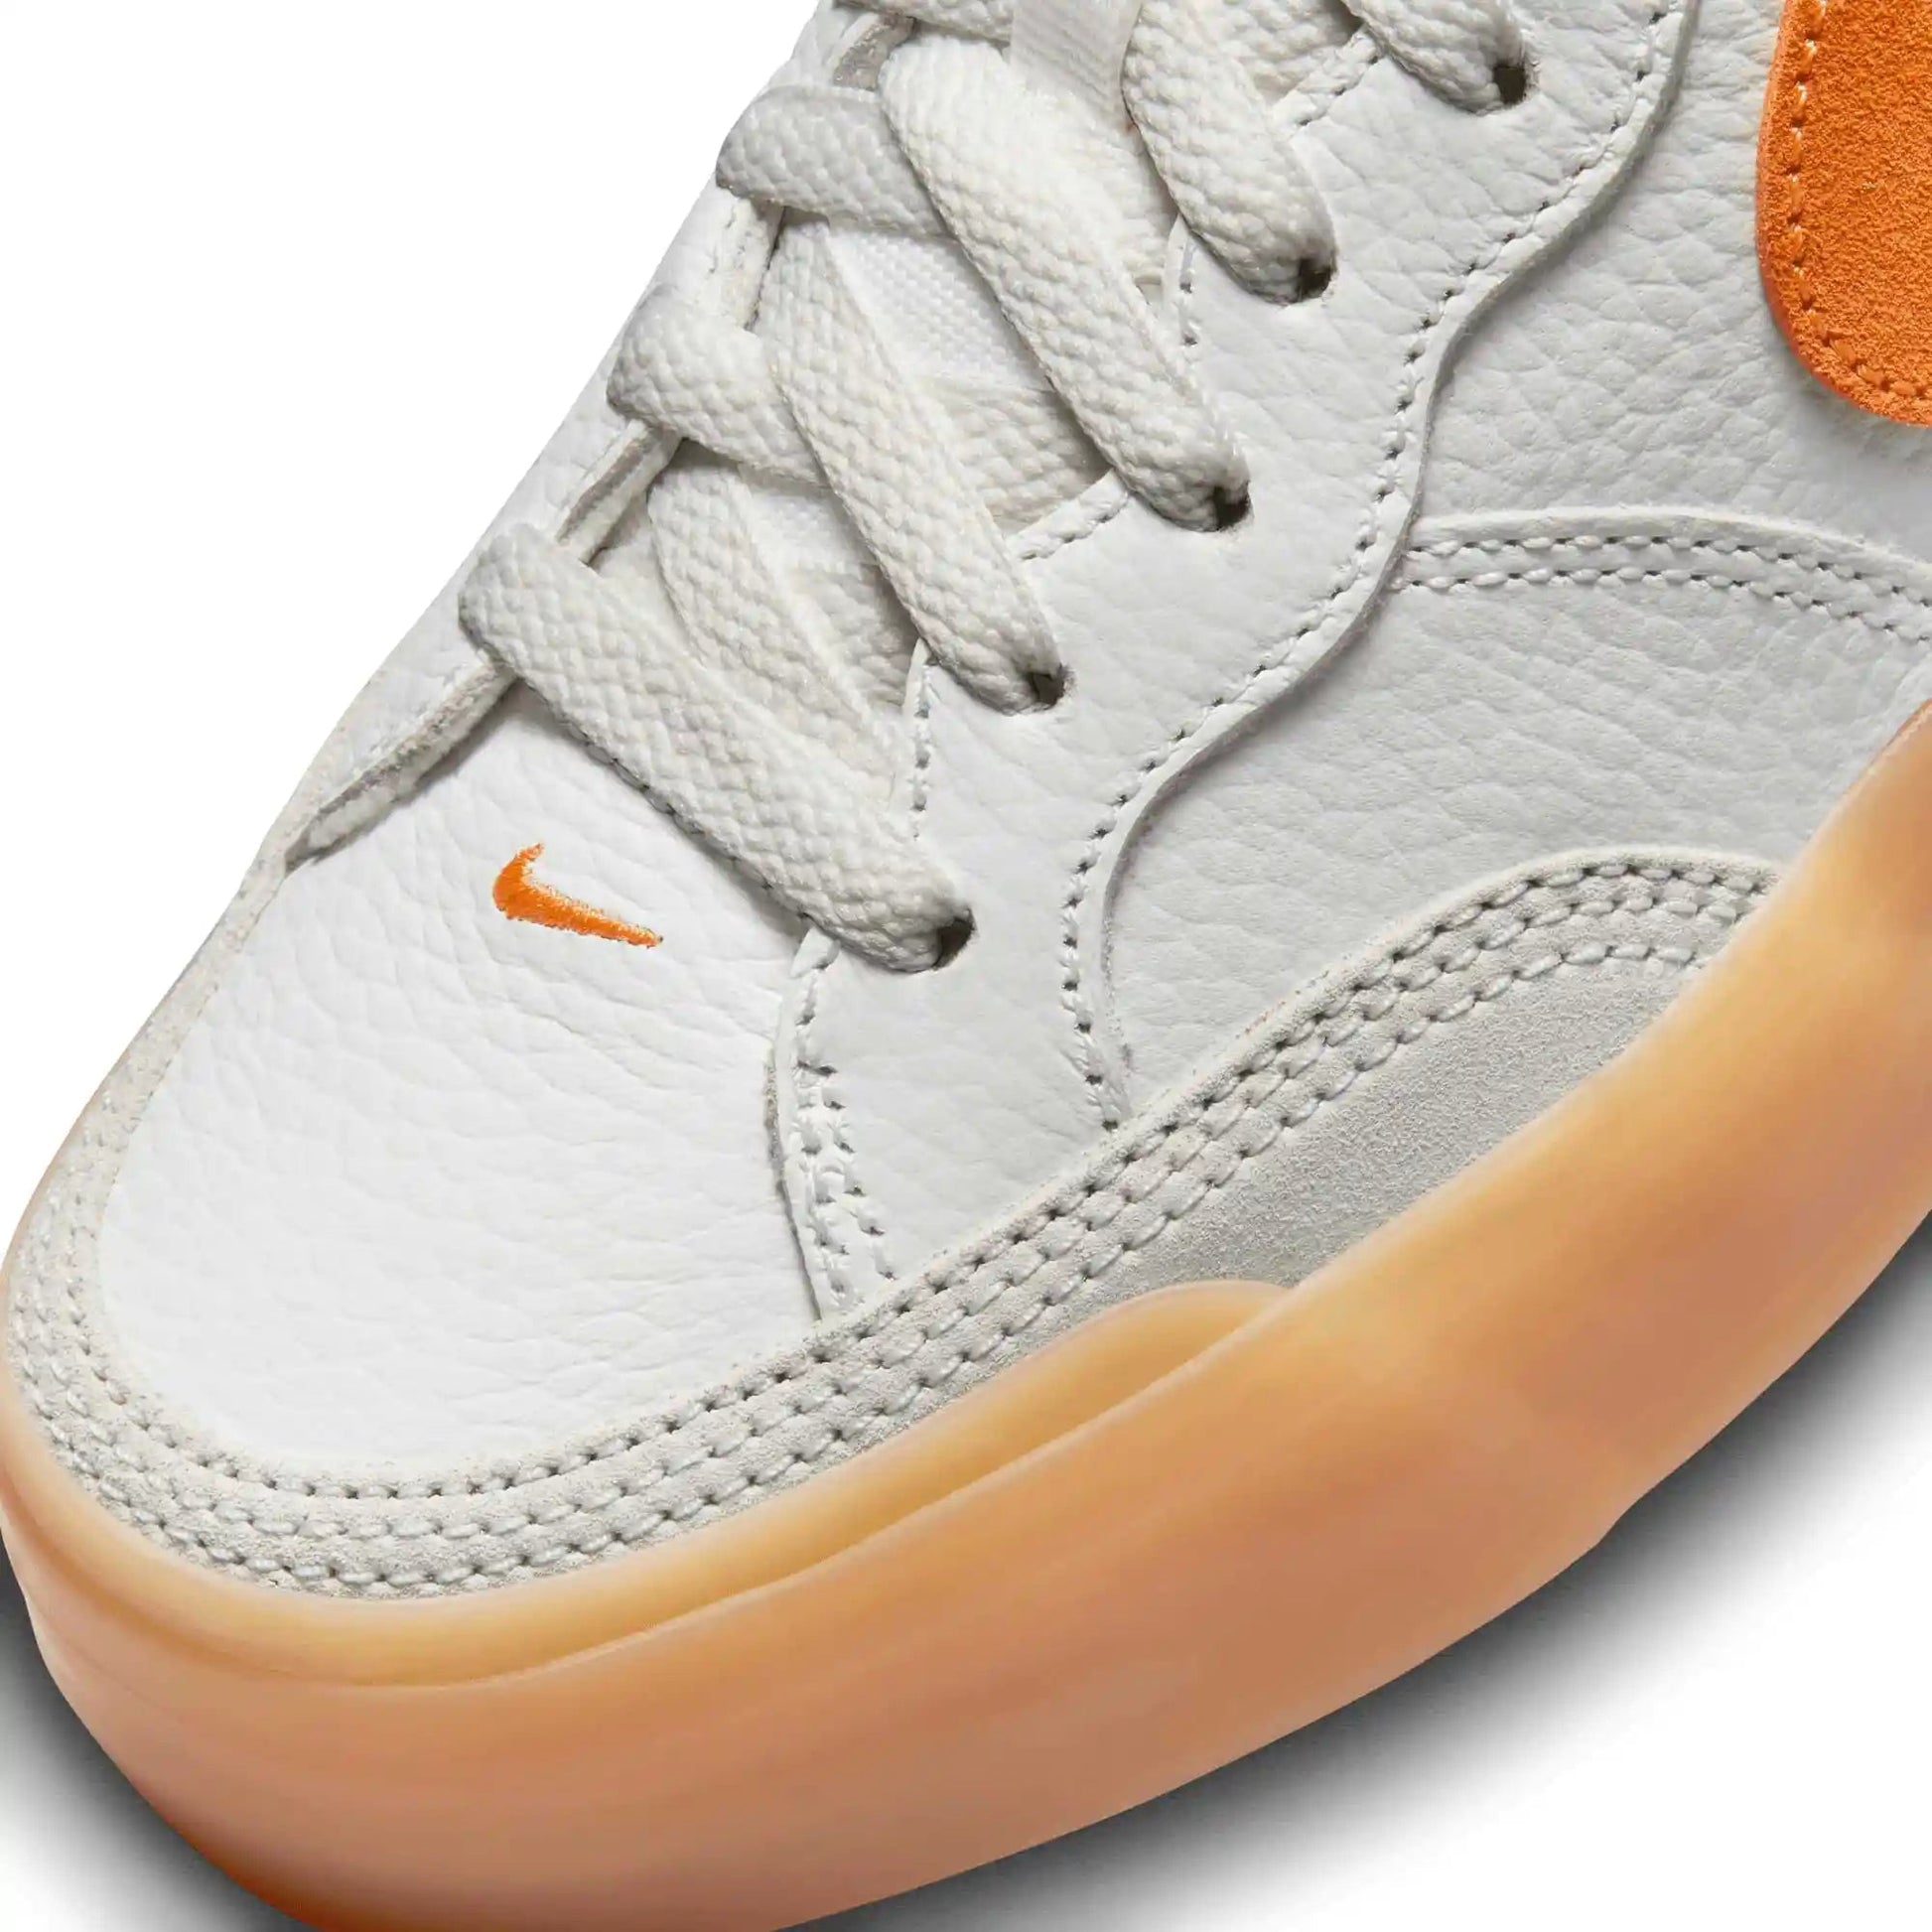 Nike SB Zoom Pogo Plus Premium, summit white/bright mandarin - Tiki Room Skateboards - 11